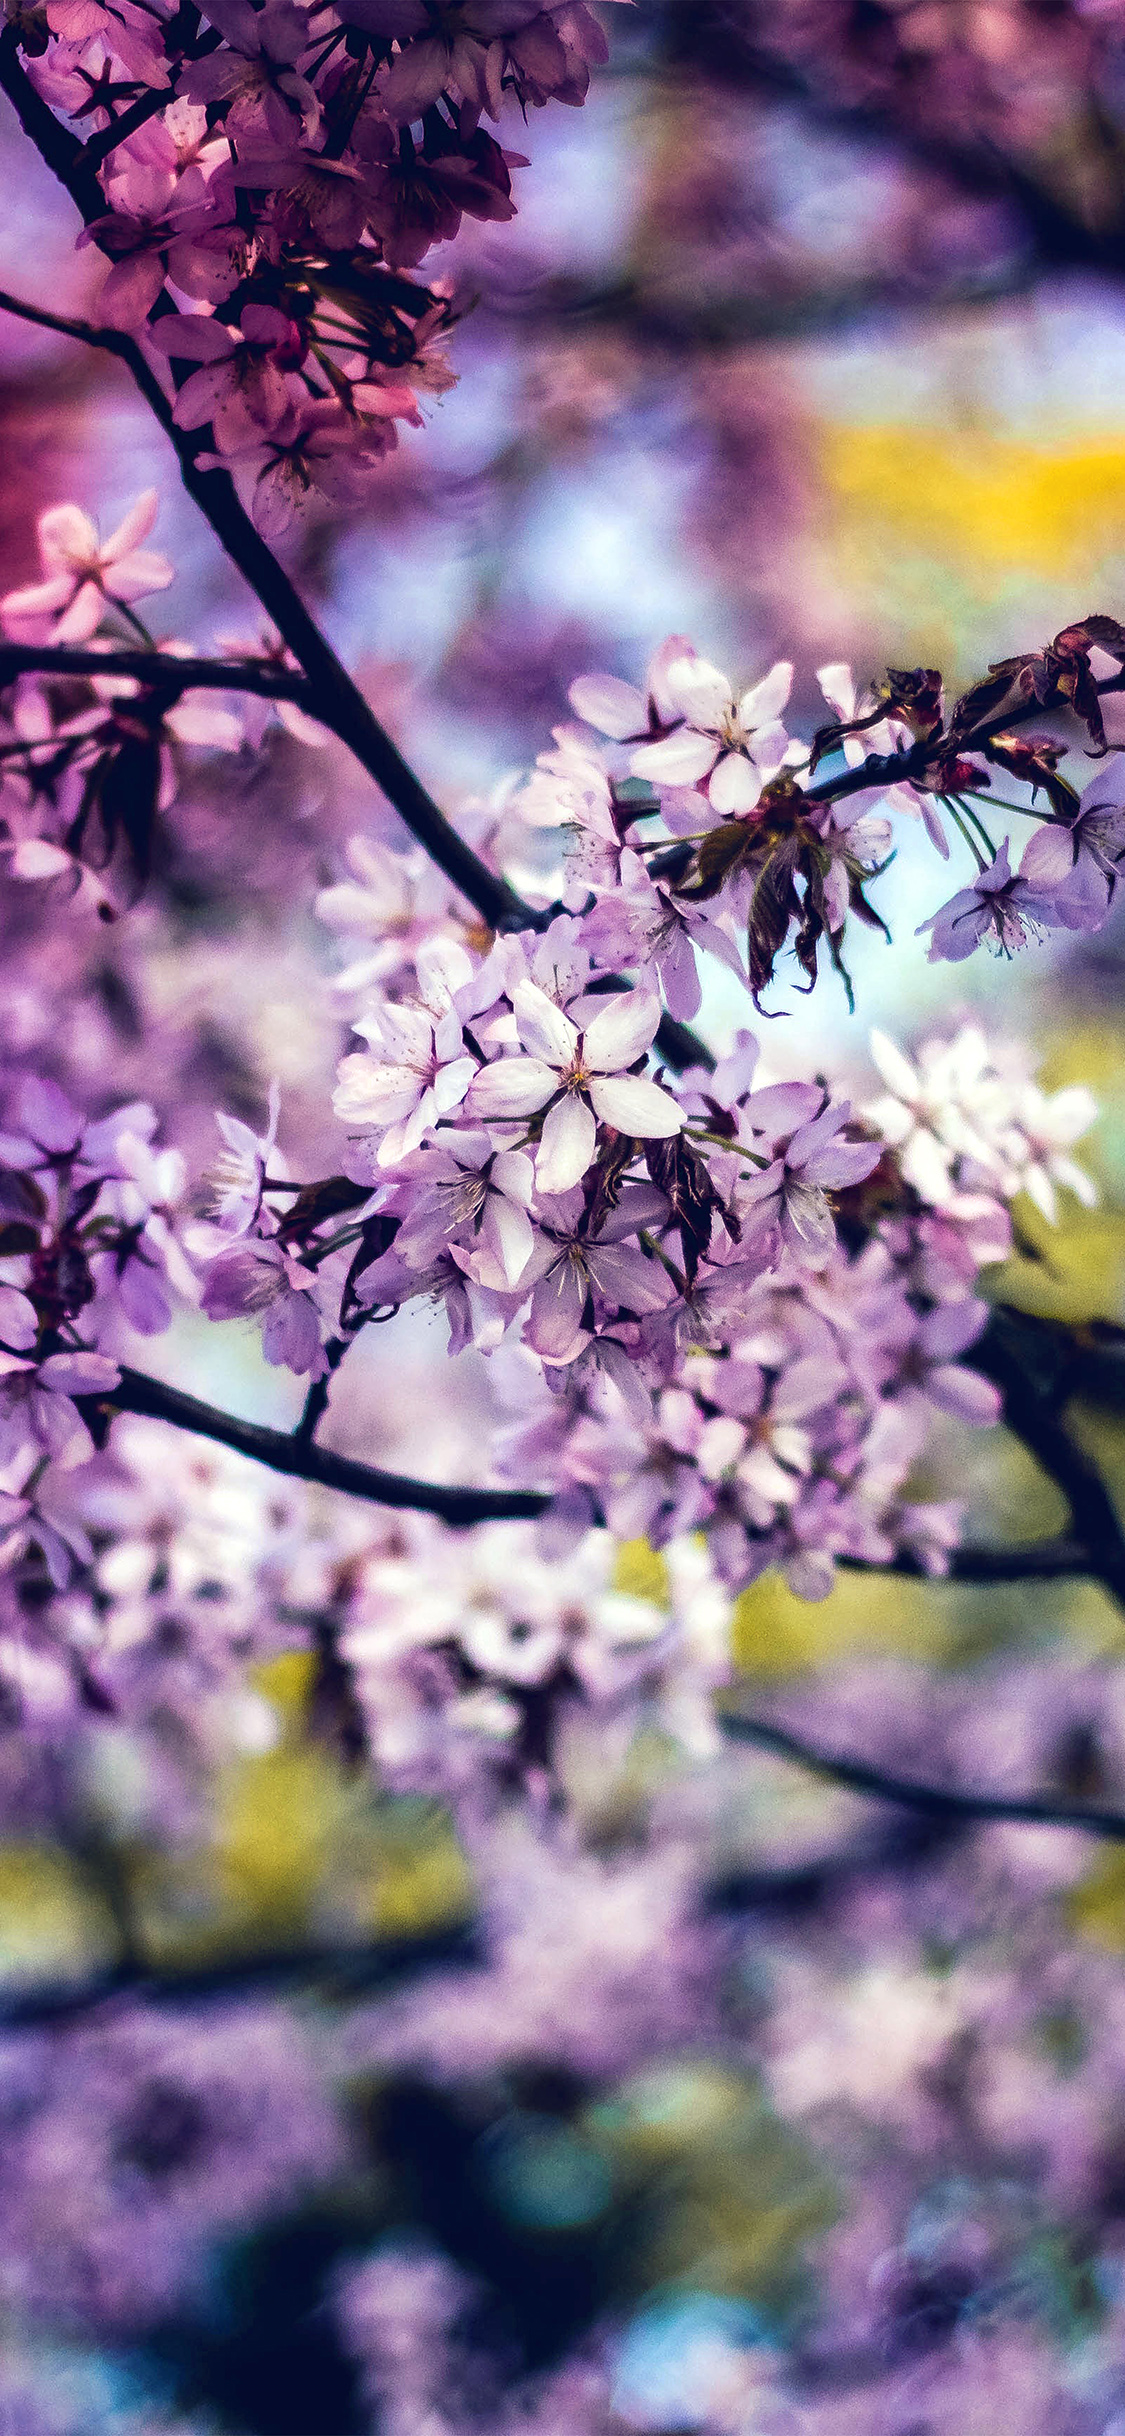 iPhone X wallpaper. flower pink blue nature bokeh tree spring rainbow